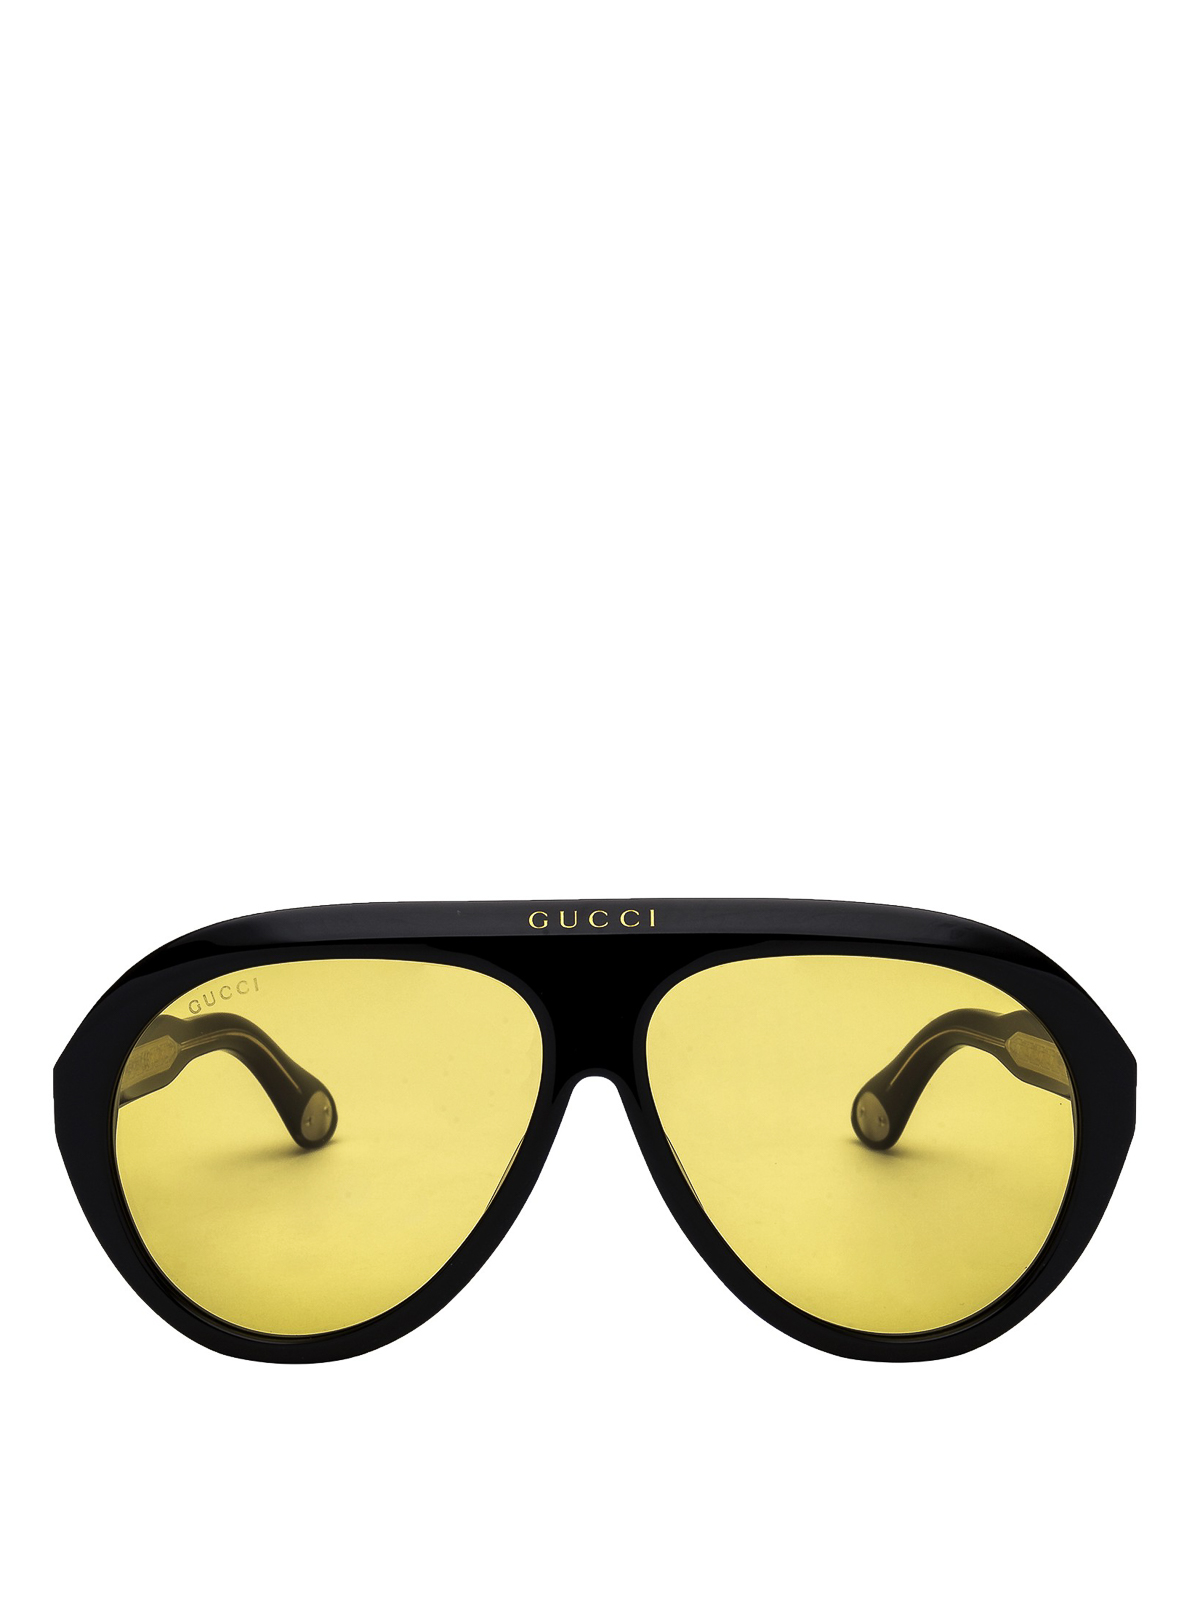 Navigator sunglasses with yellow lenses 